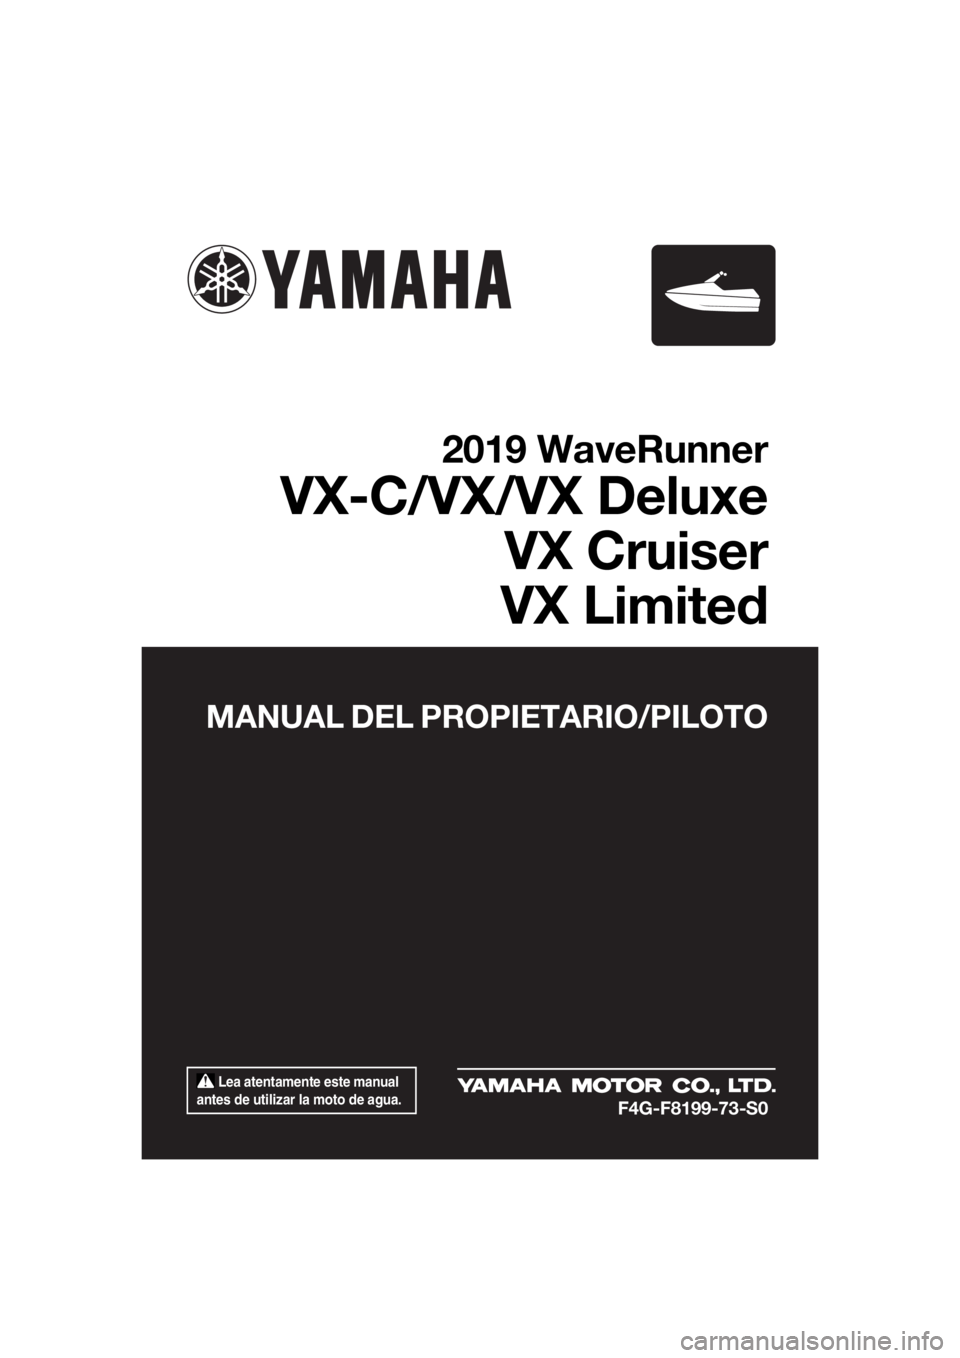 YAMAHA VX 2019  Manuale de Empleo (in Spanish)  Lea atentamente este manual 
antes de utilizar la moto de agua.
MANUAL DEL PROPIETARIO/PILOTO
2019 WaveRunner
VX-C/VX/VX Deluxe
VX Cruiser
VX Limited
F4G-F8199-73-S0
UF4G73S0.book  Page 1  Thursday, 